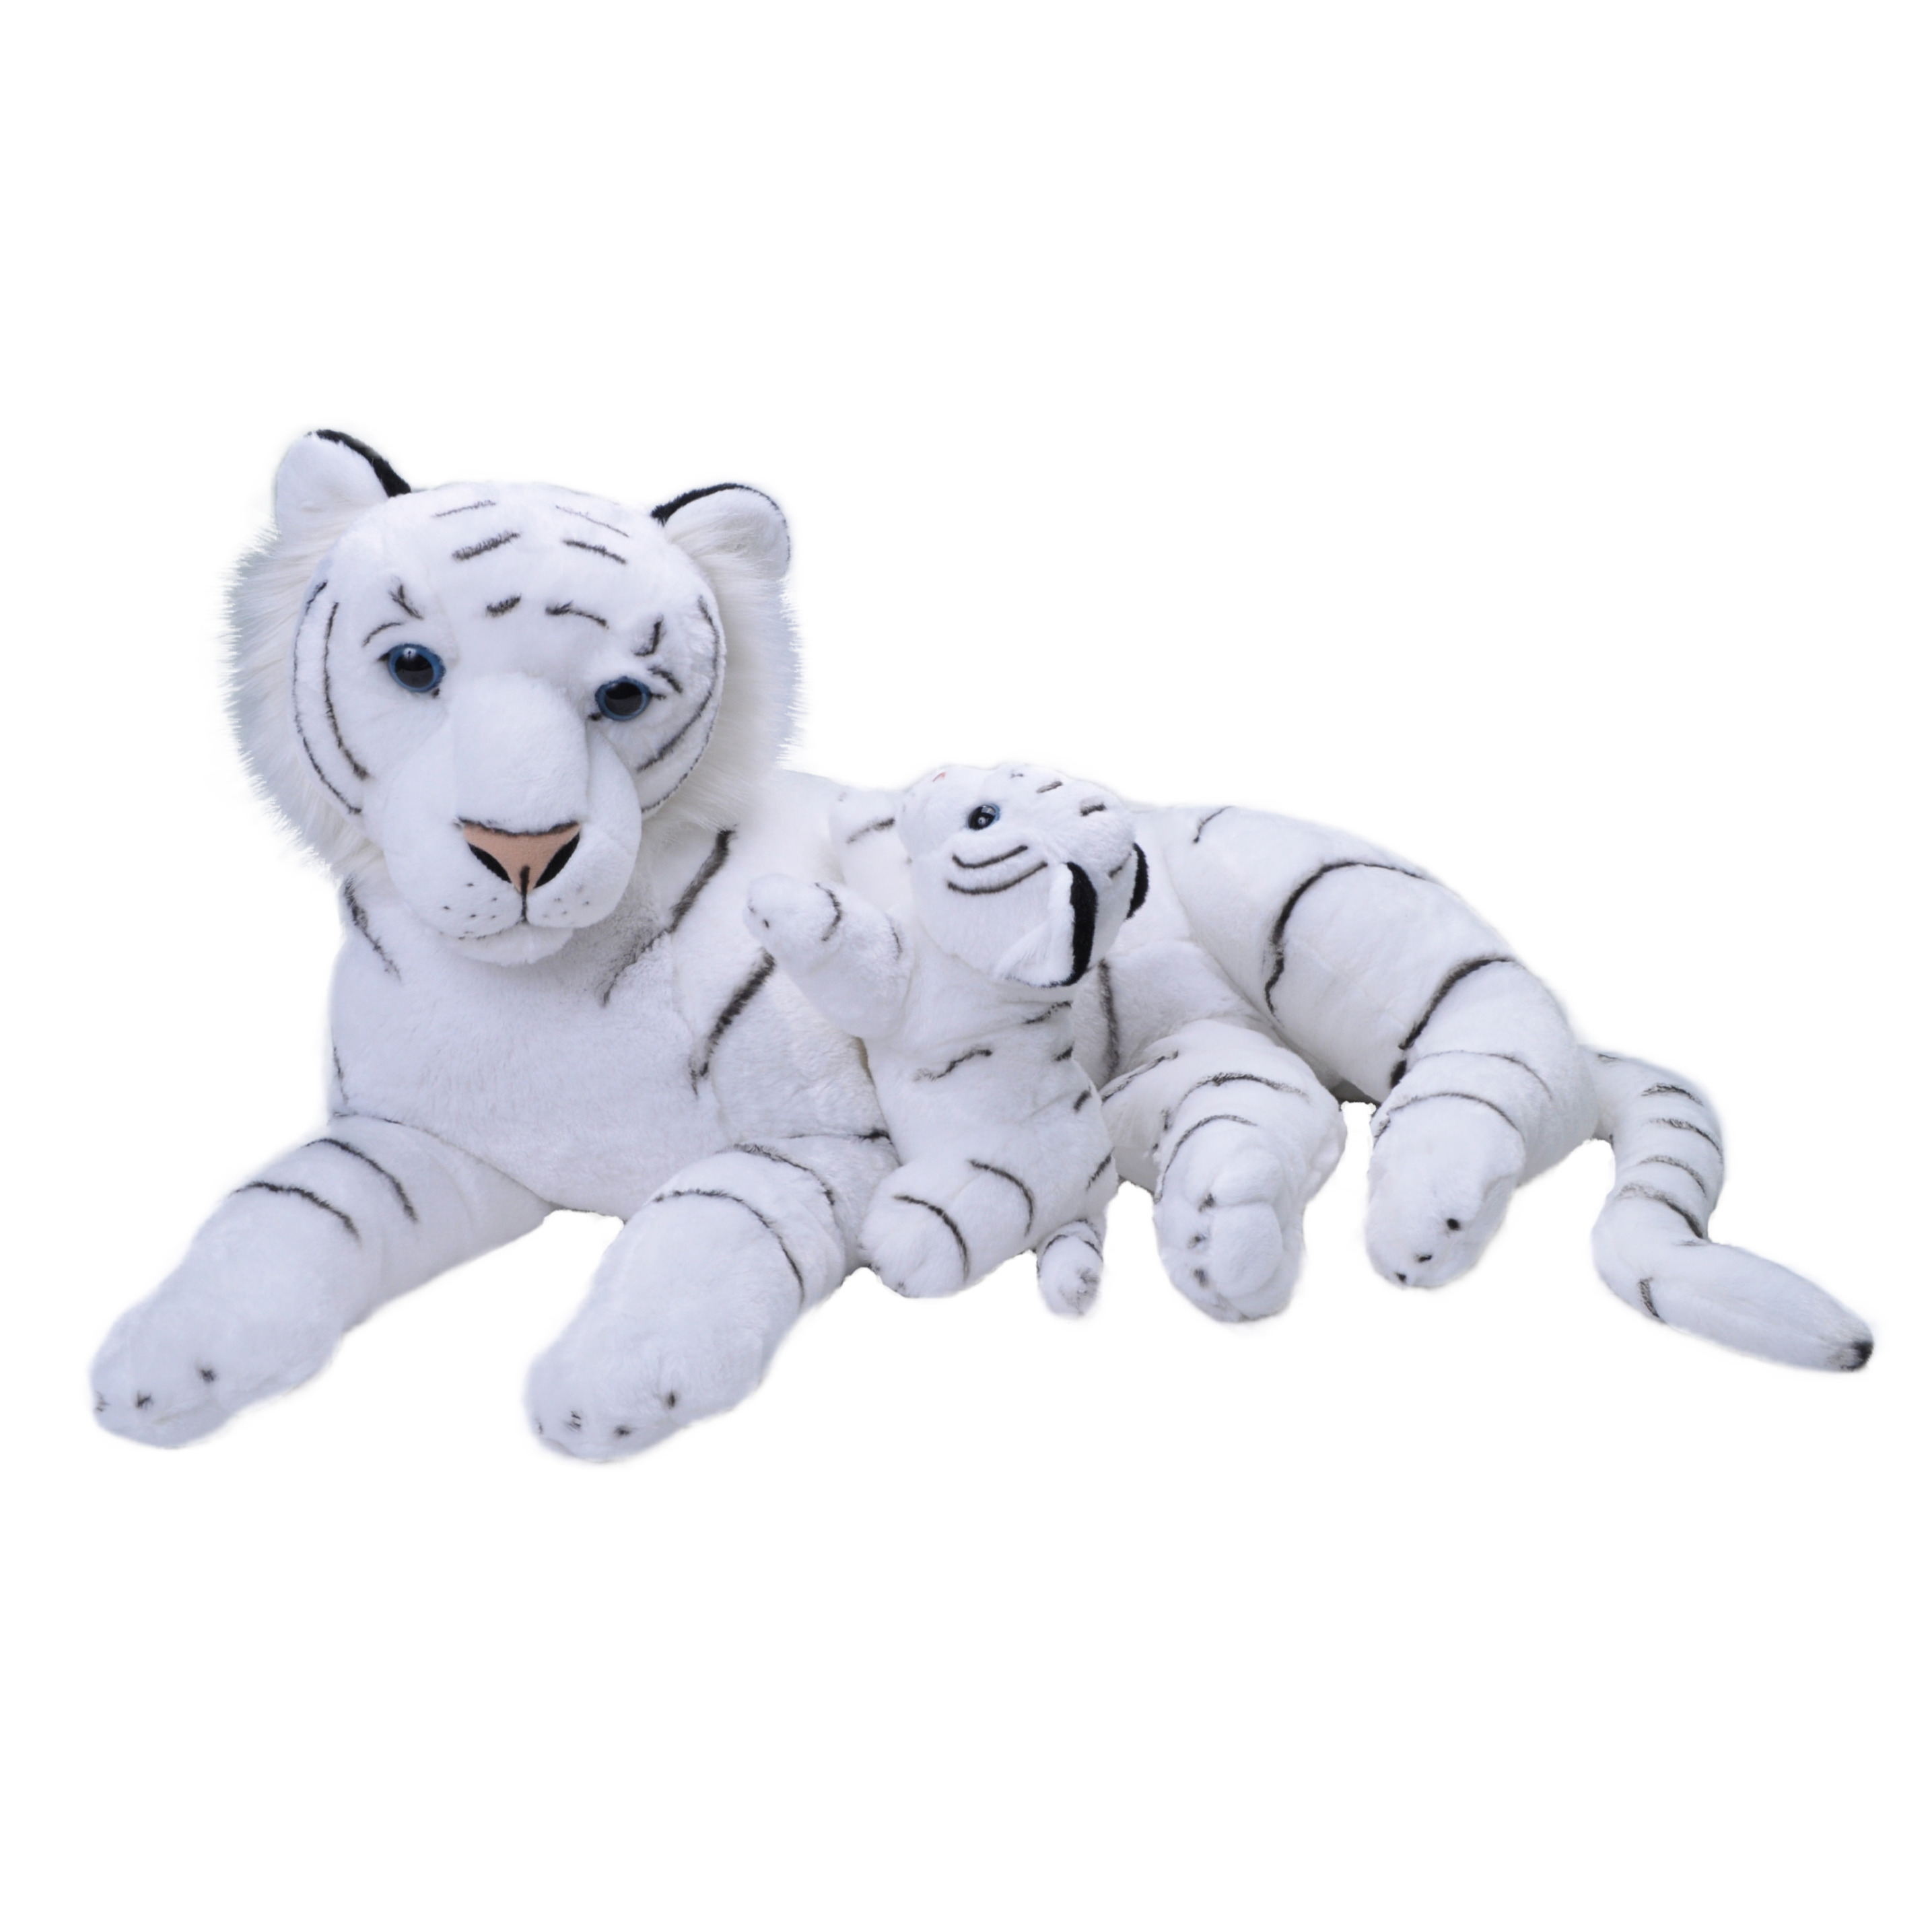 Grote Pluche knuffel dieren familie witte tijgers 80 cm